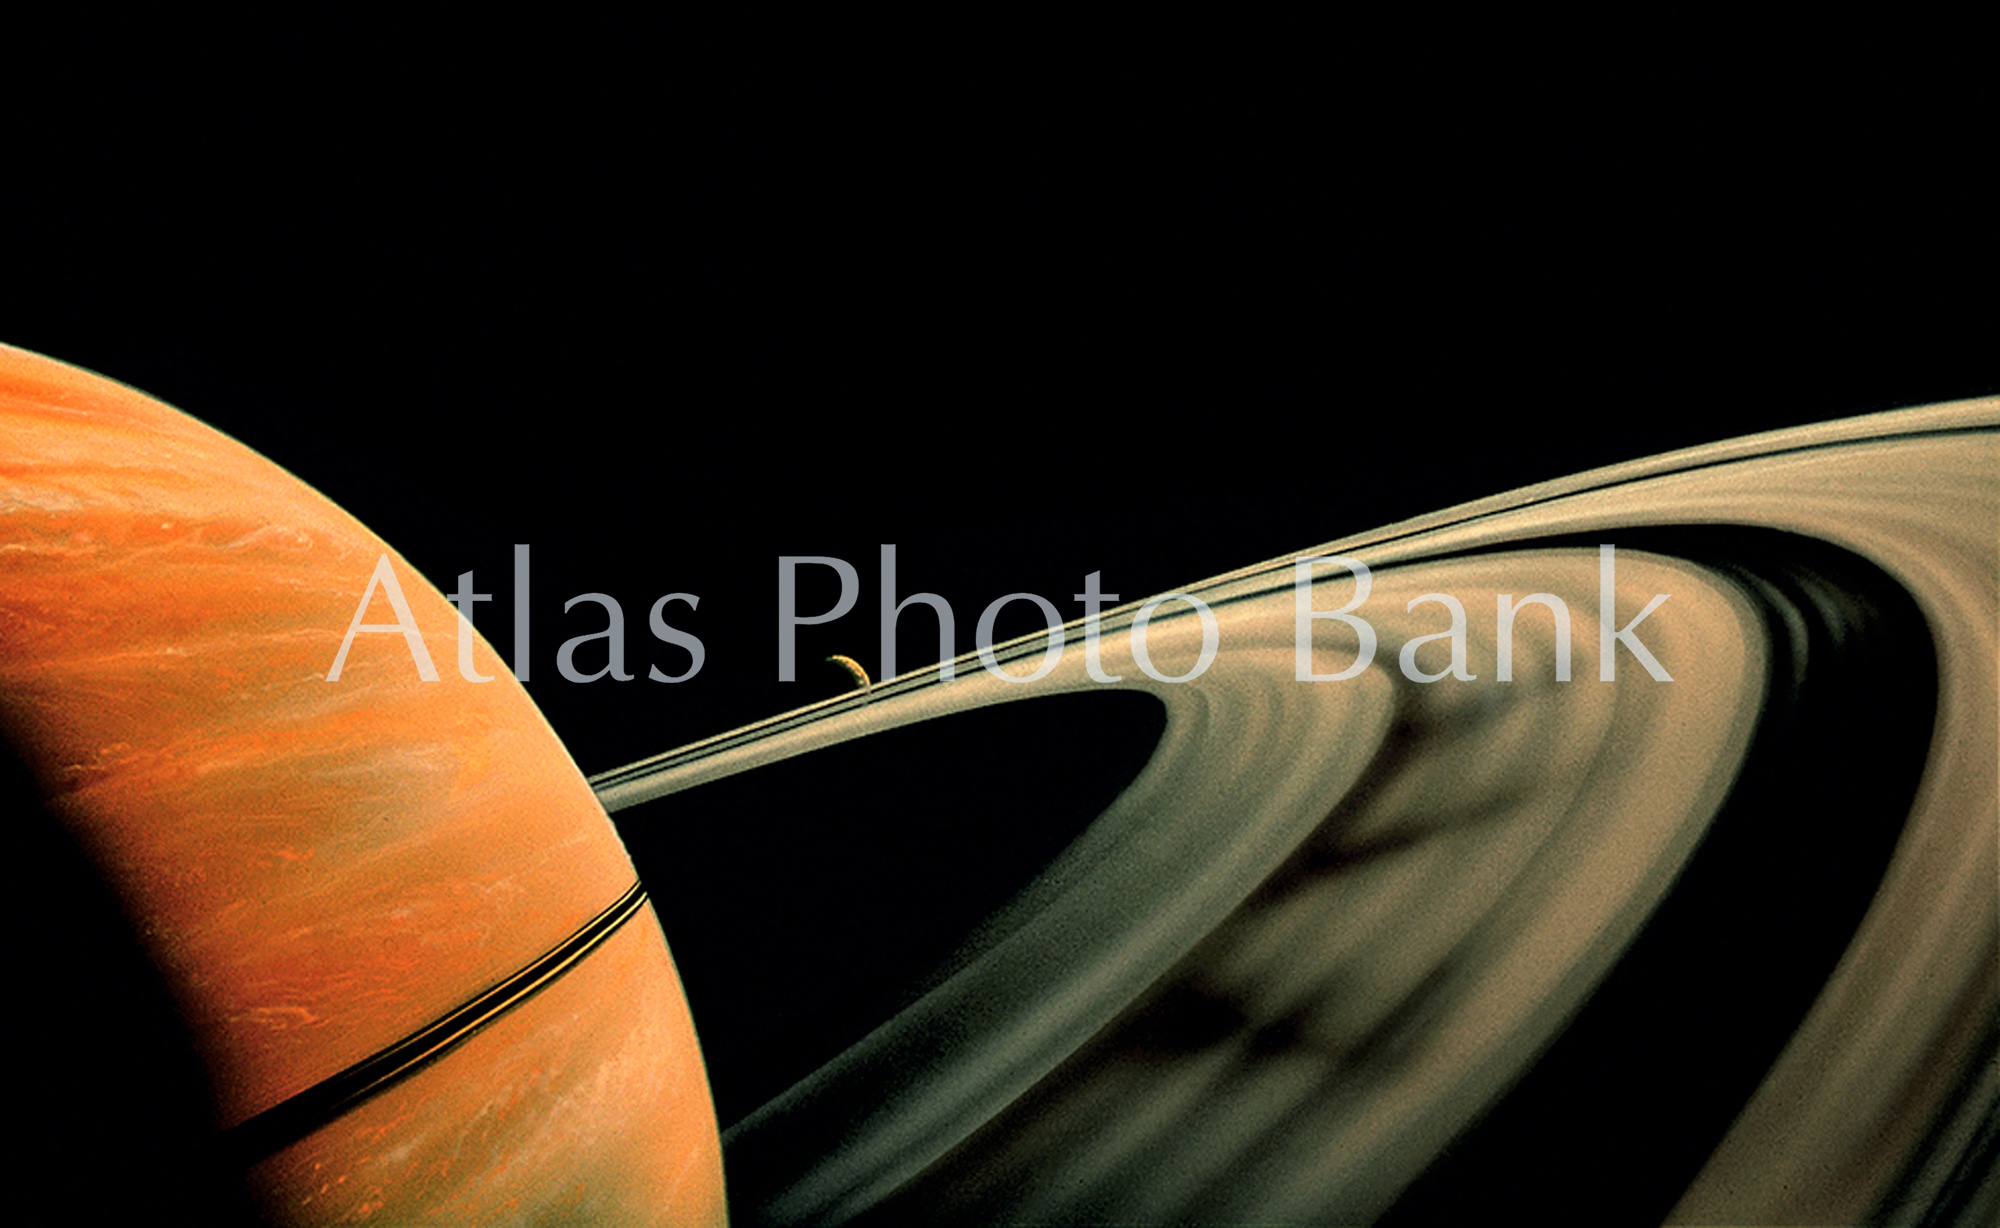 SS-121-1-土星の環の模様スポーク